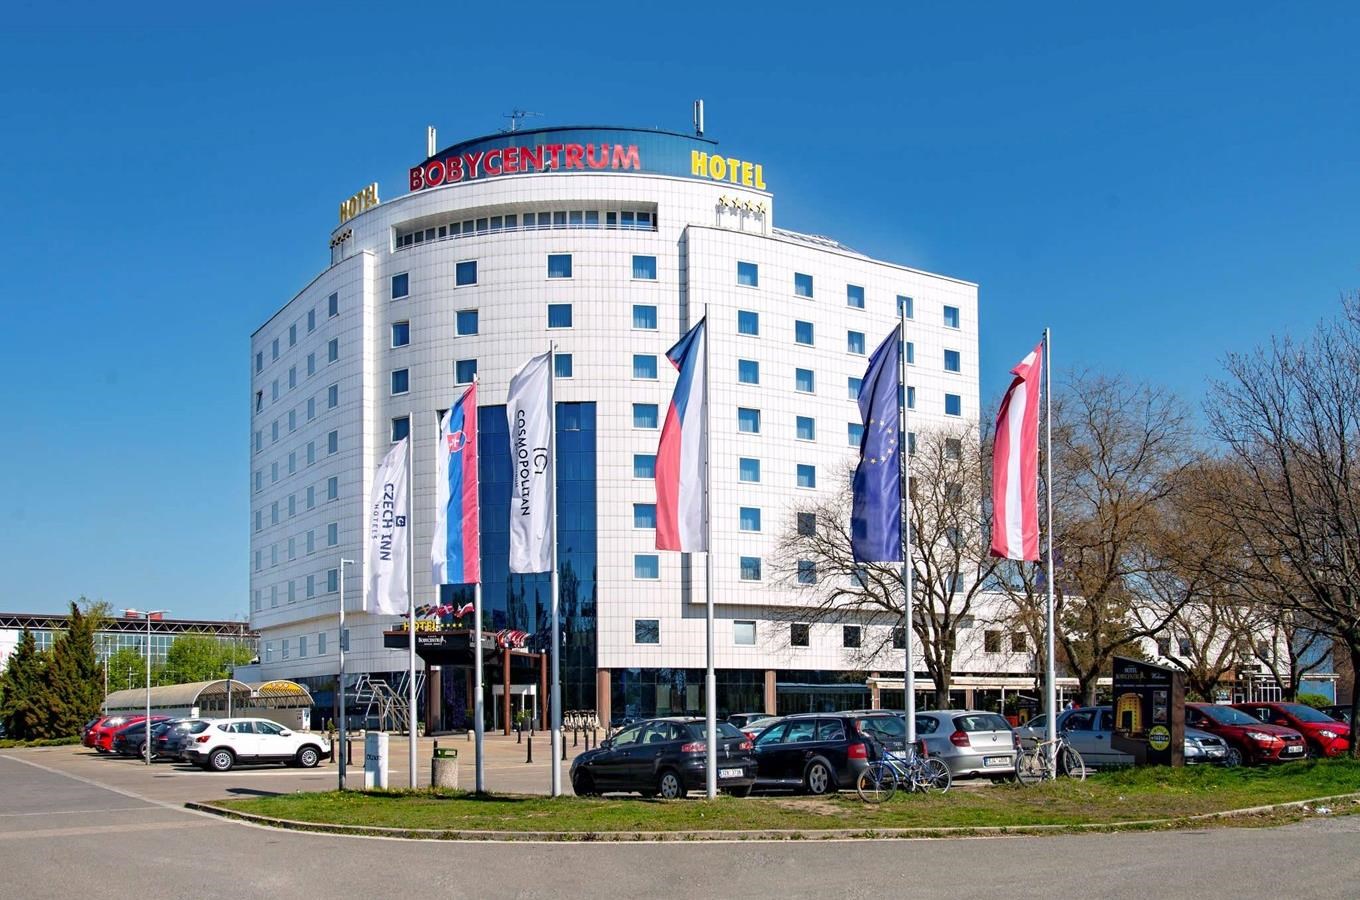 Hotel Cosmopolitan Bobycentrum 